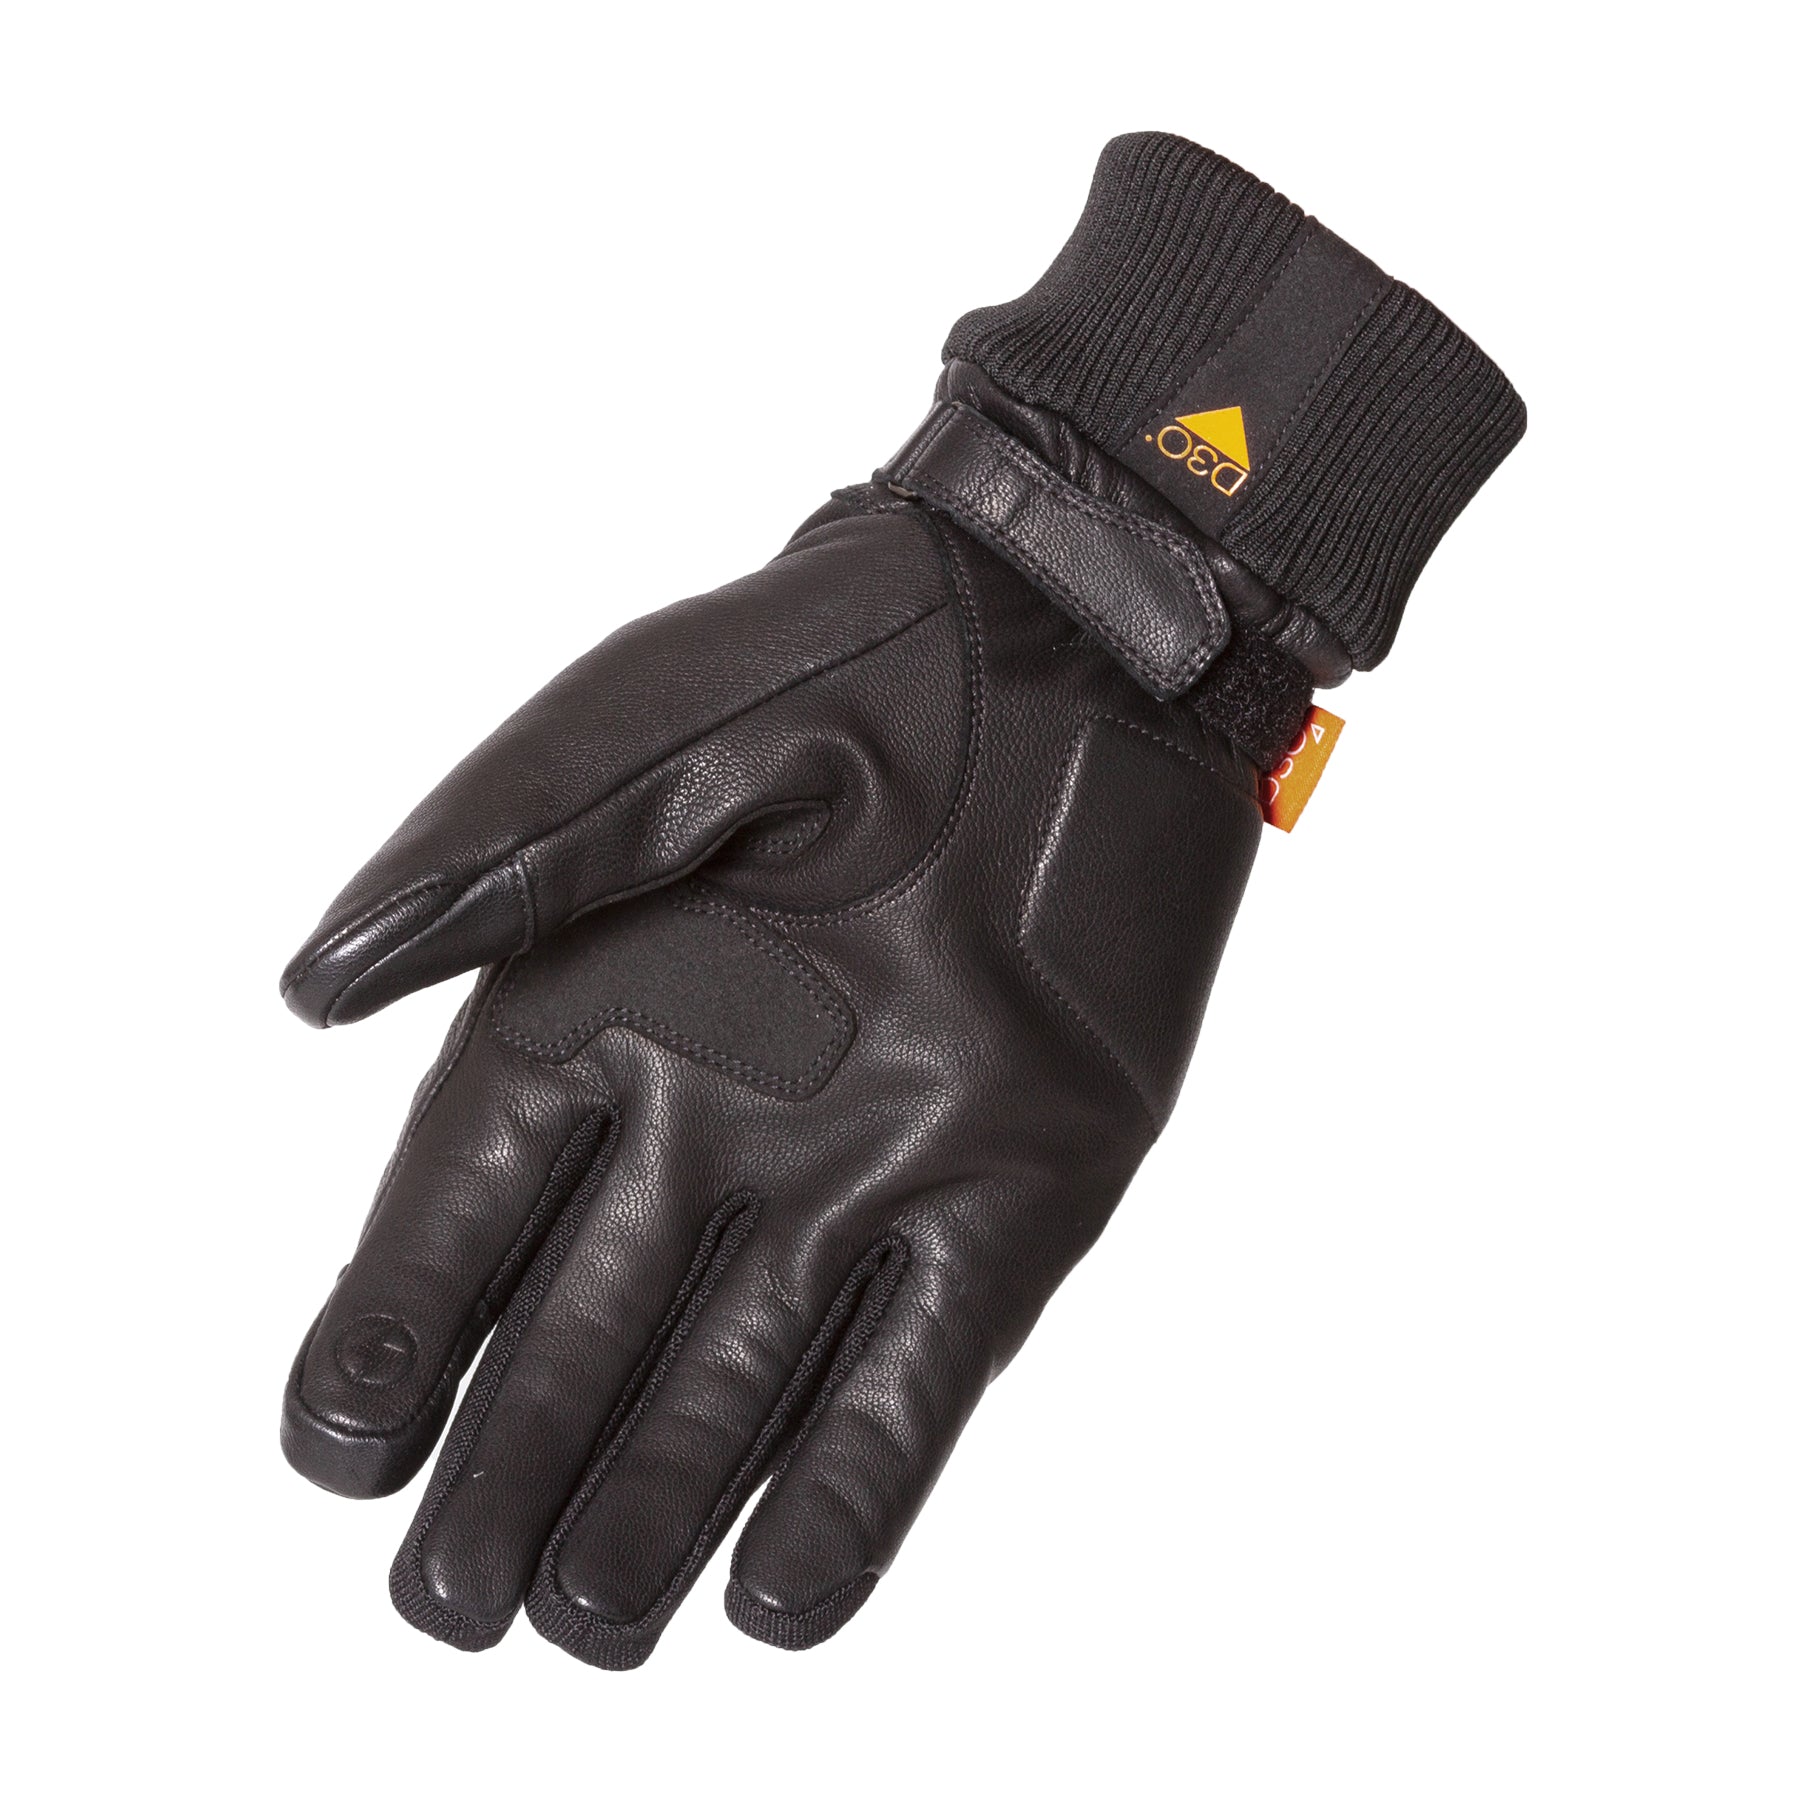 Nelson D3O Hydro Glove